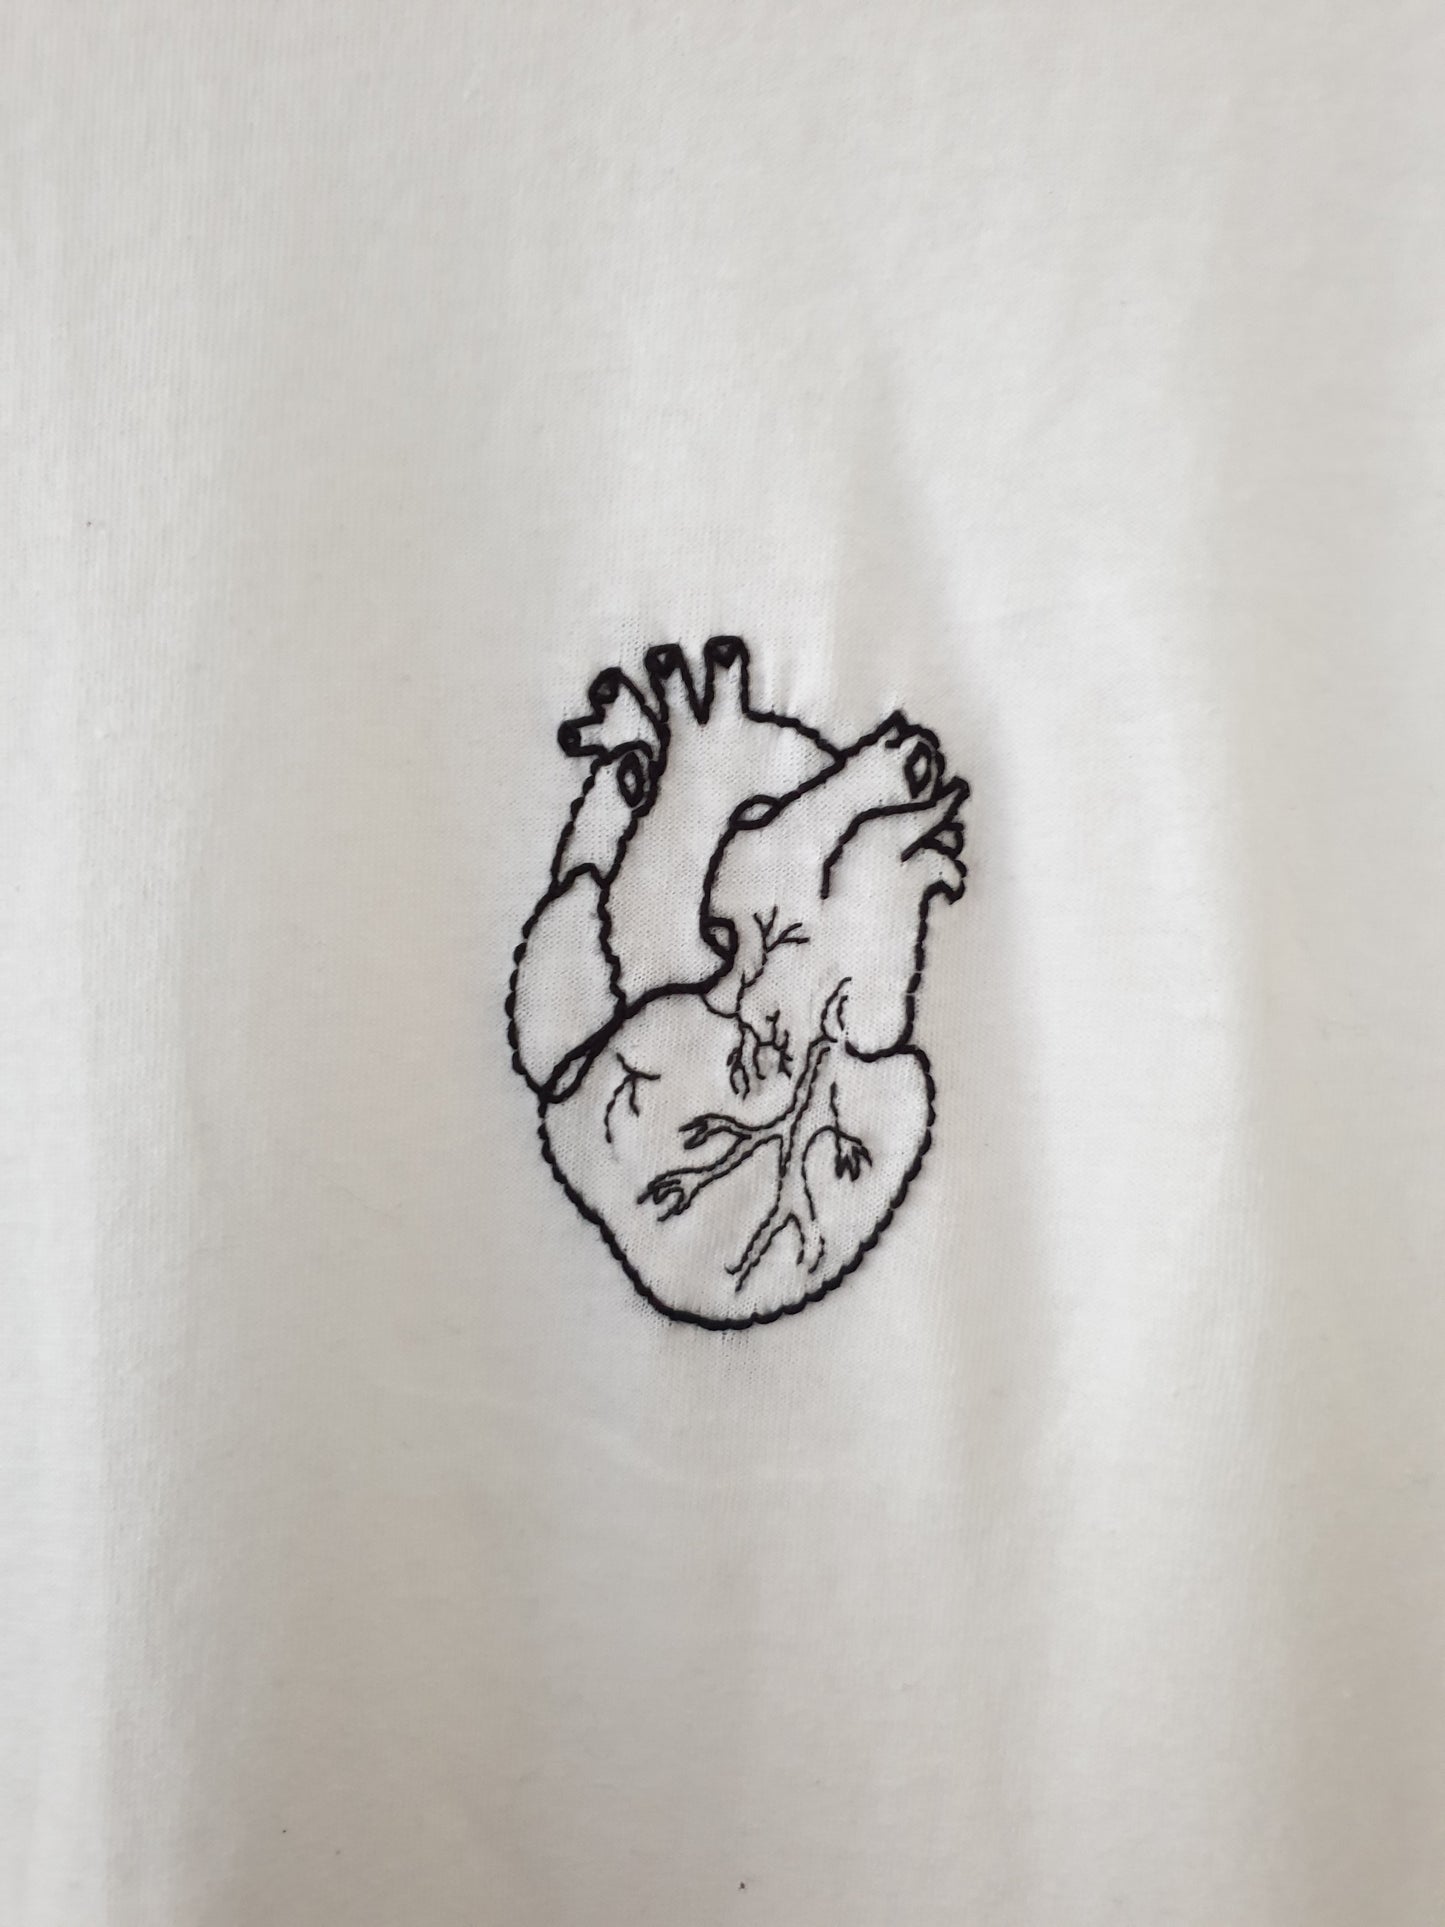 Hand Embroidered Anatomic Heart Shirt